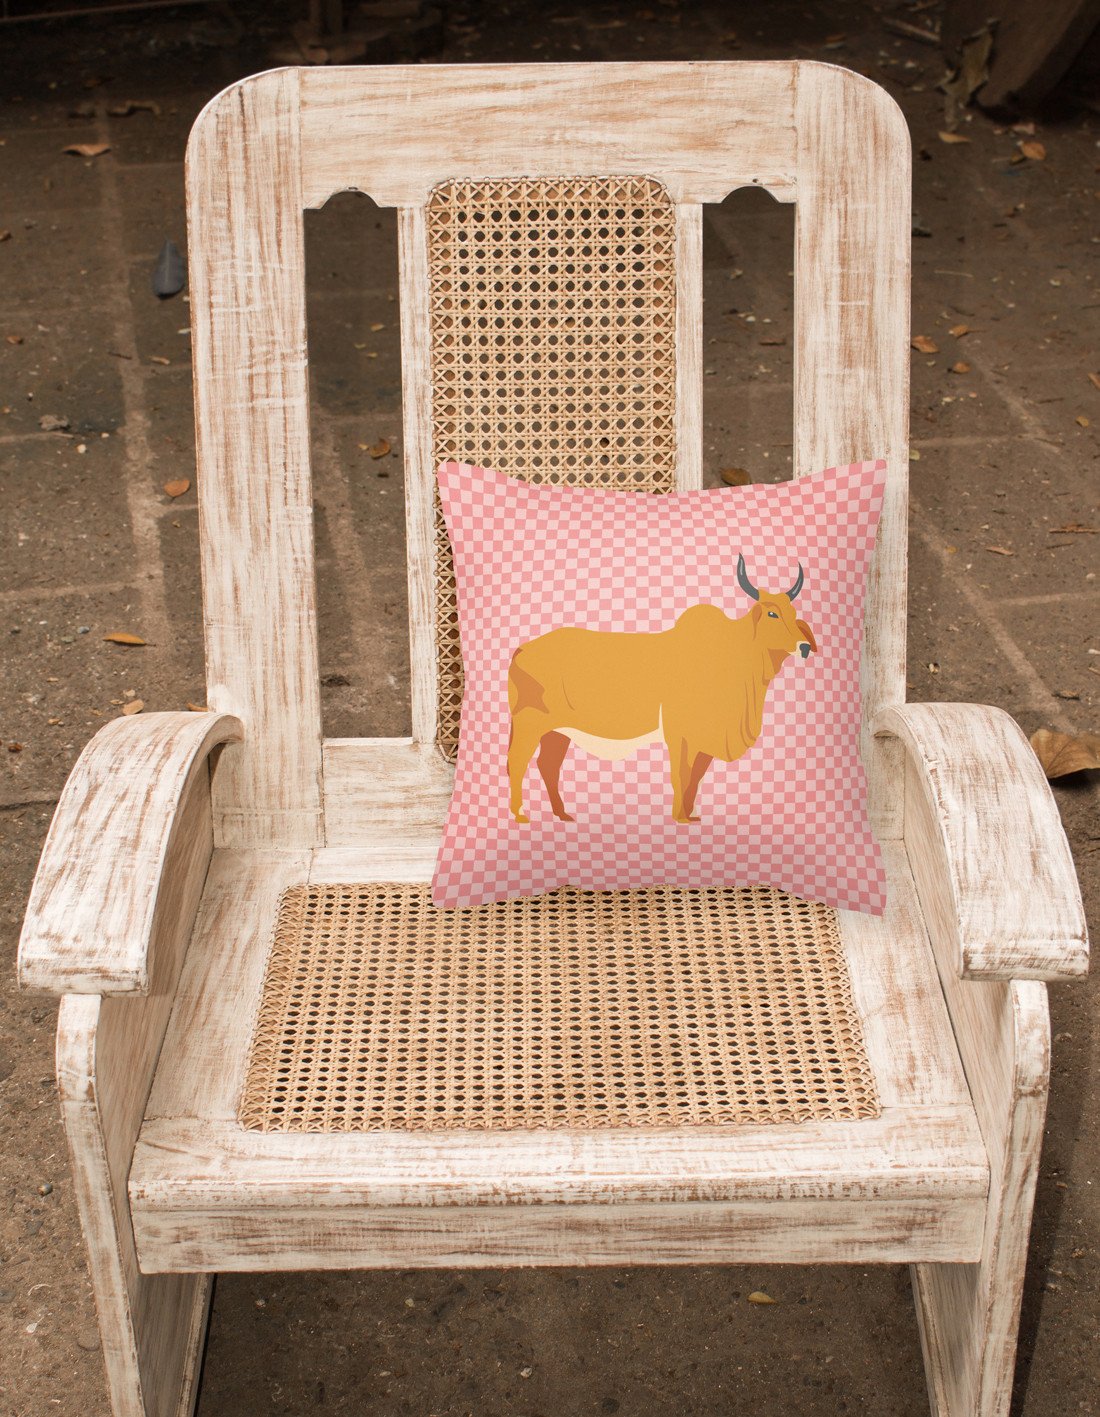 Zebu Indicine Cow Pink Check Fabric Decorative Pillow BB7825PW1818 by Caroline's Treasures